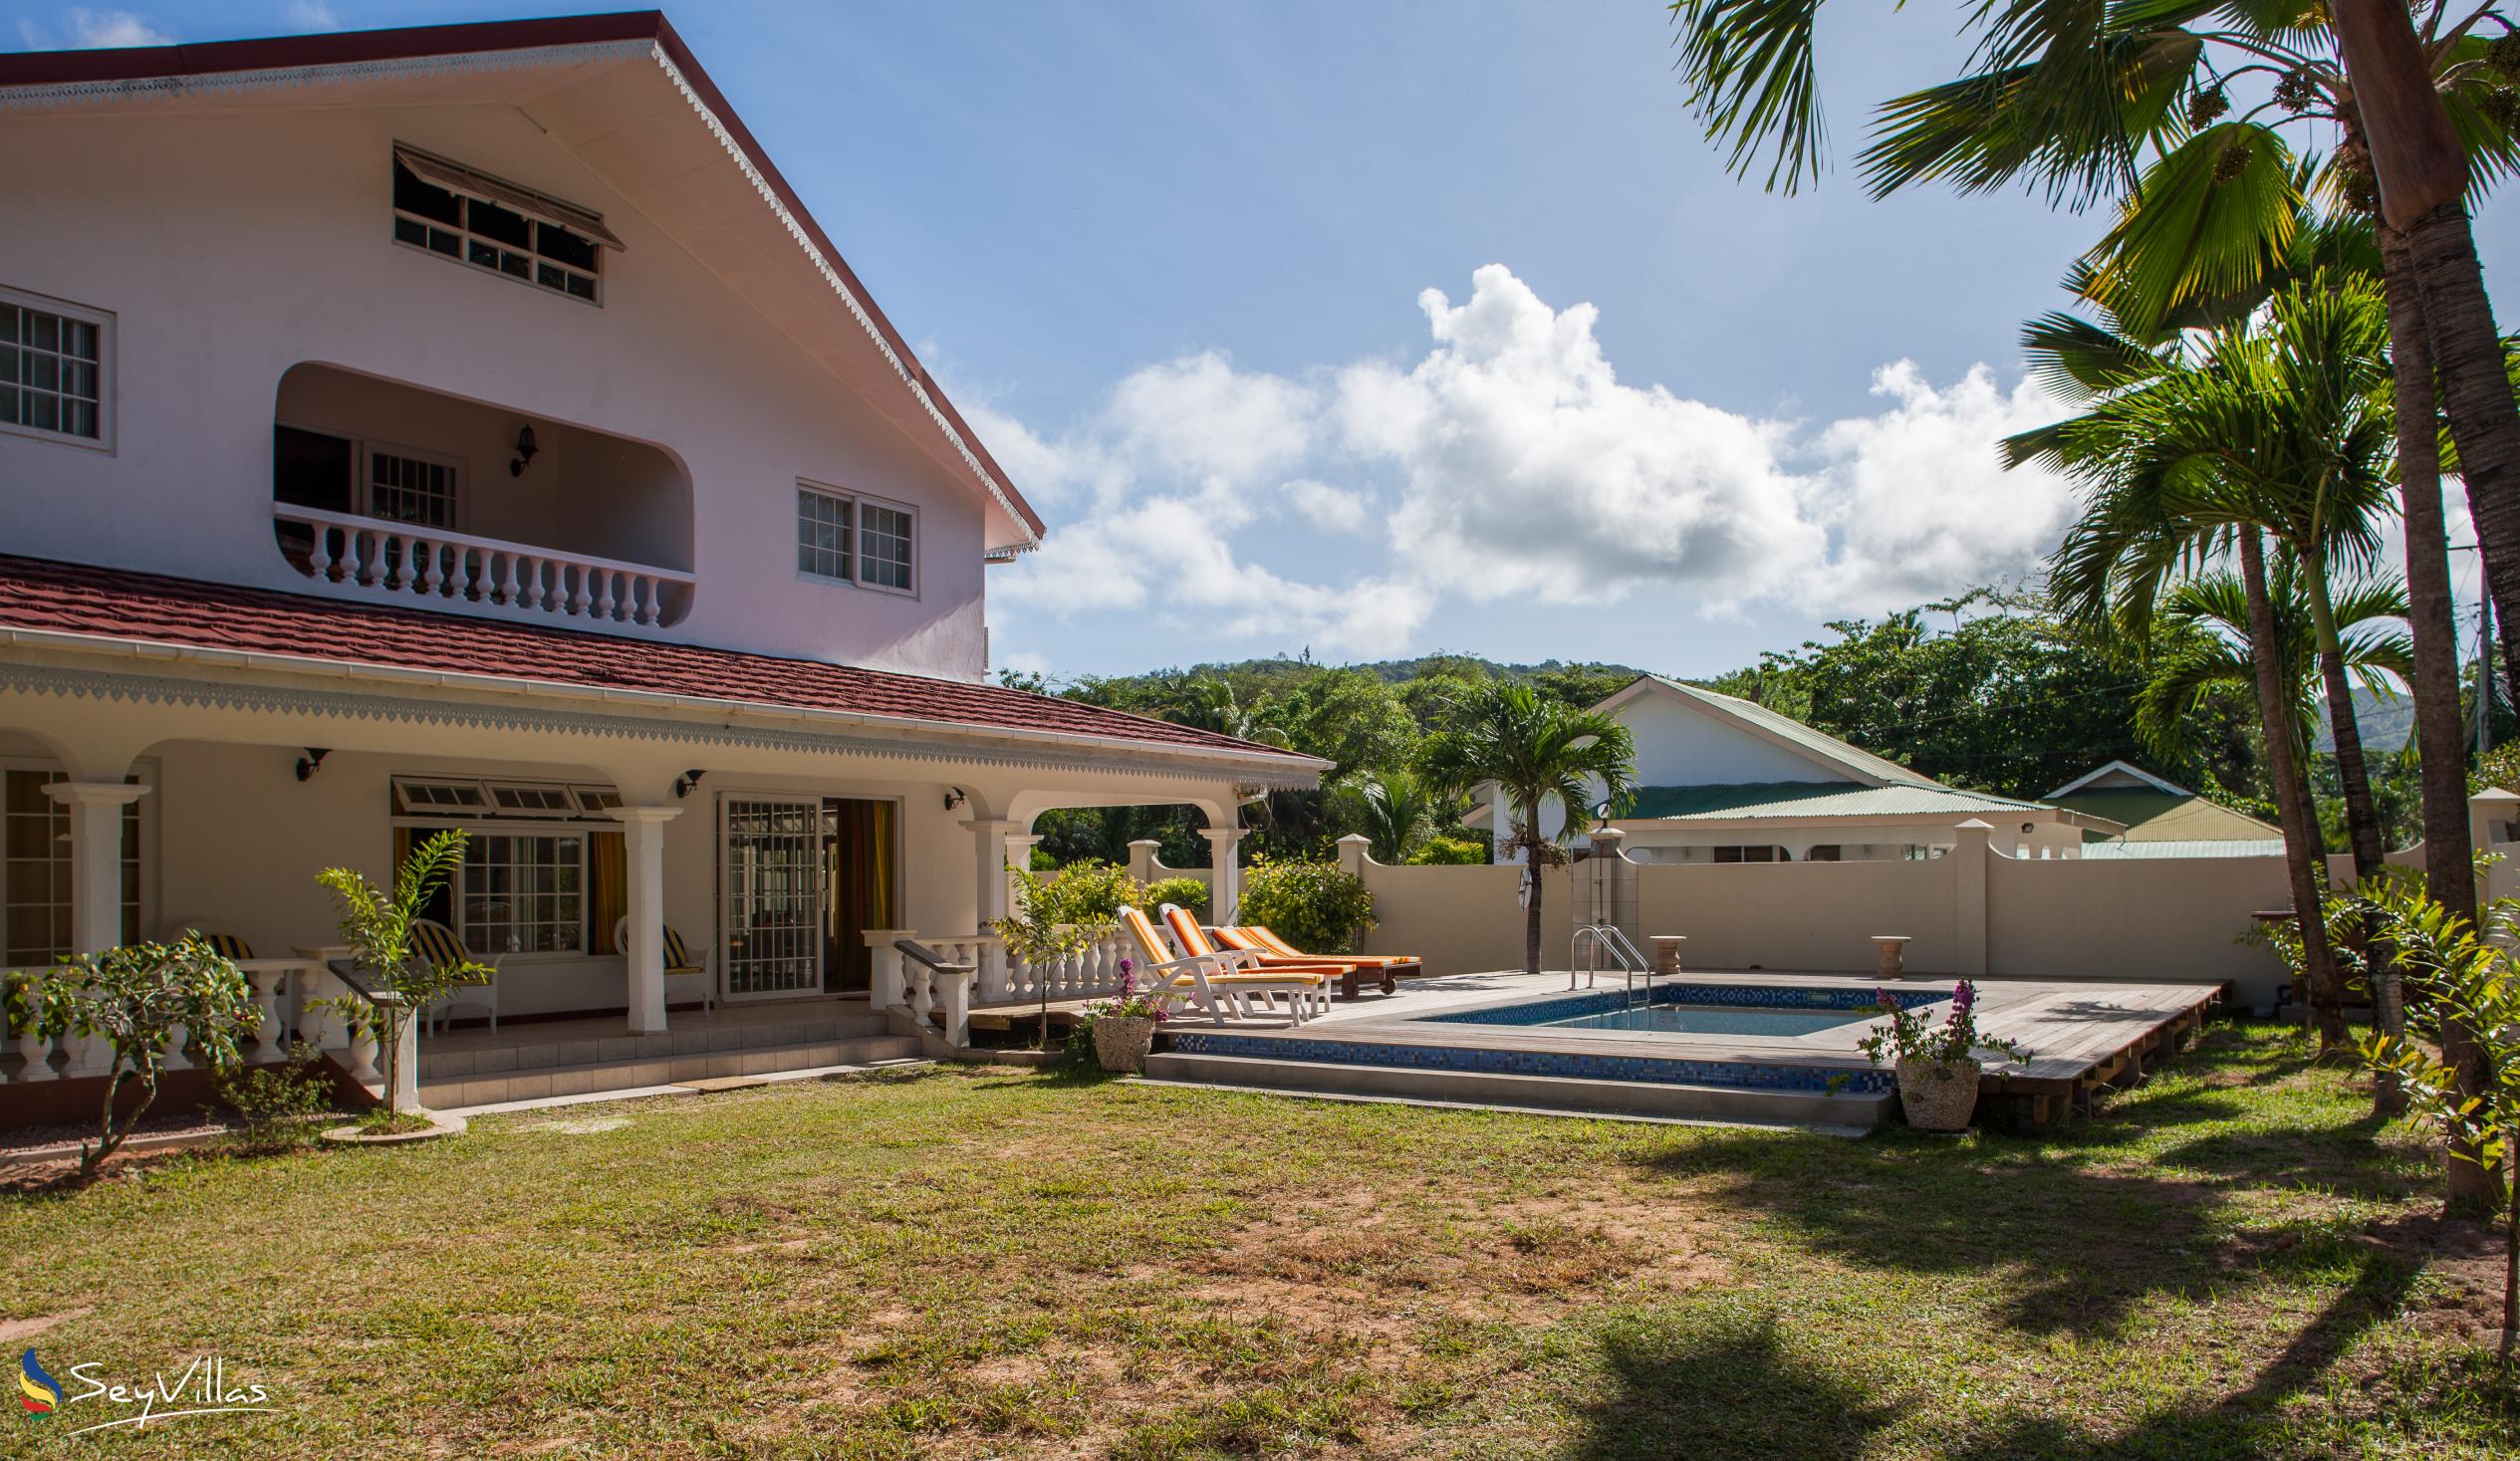 Foto 4: Villa Confort - Extérieur - Praslin (Seychelles)